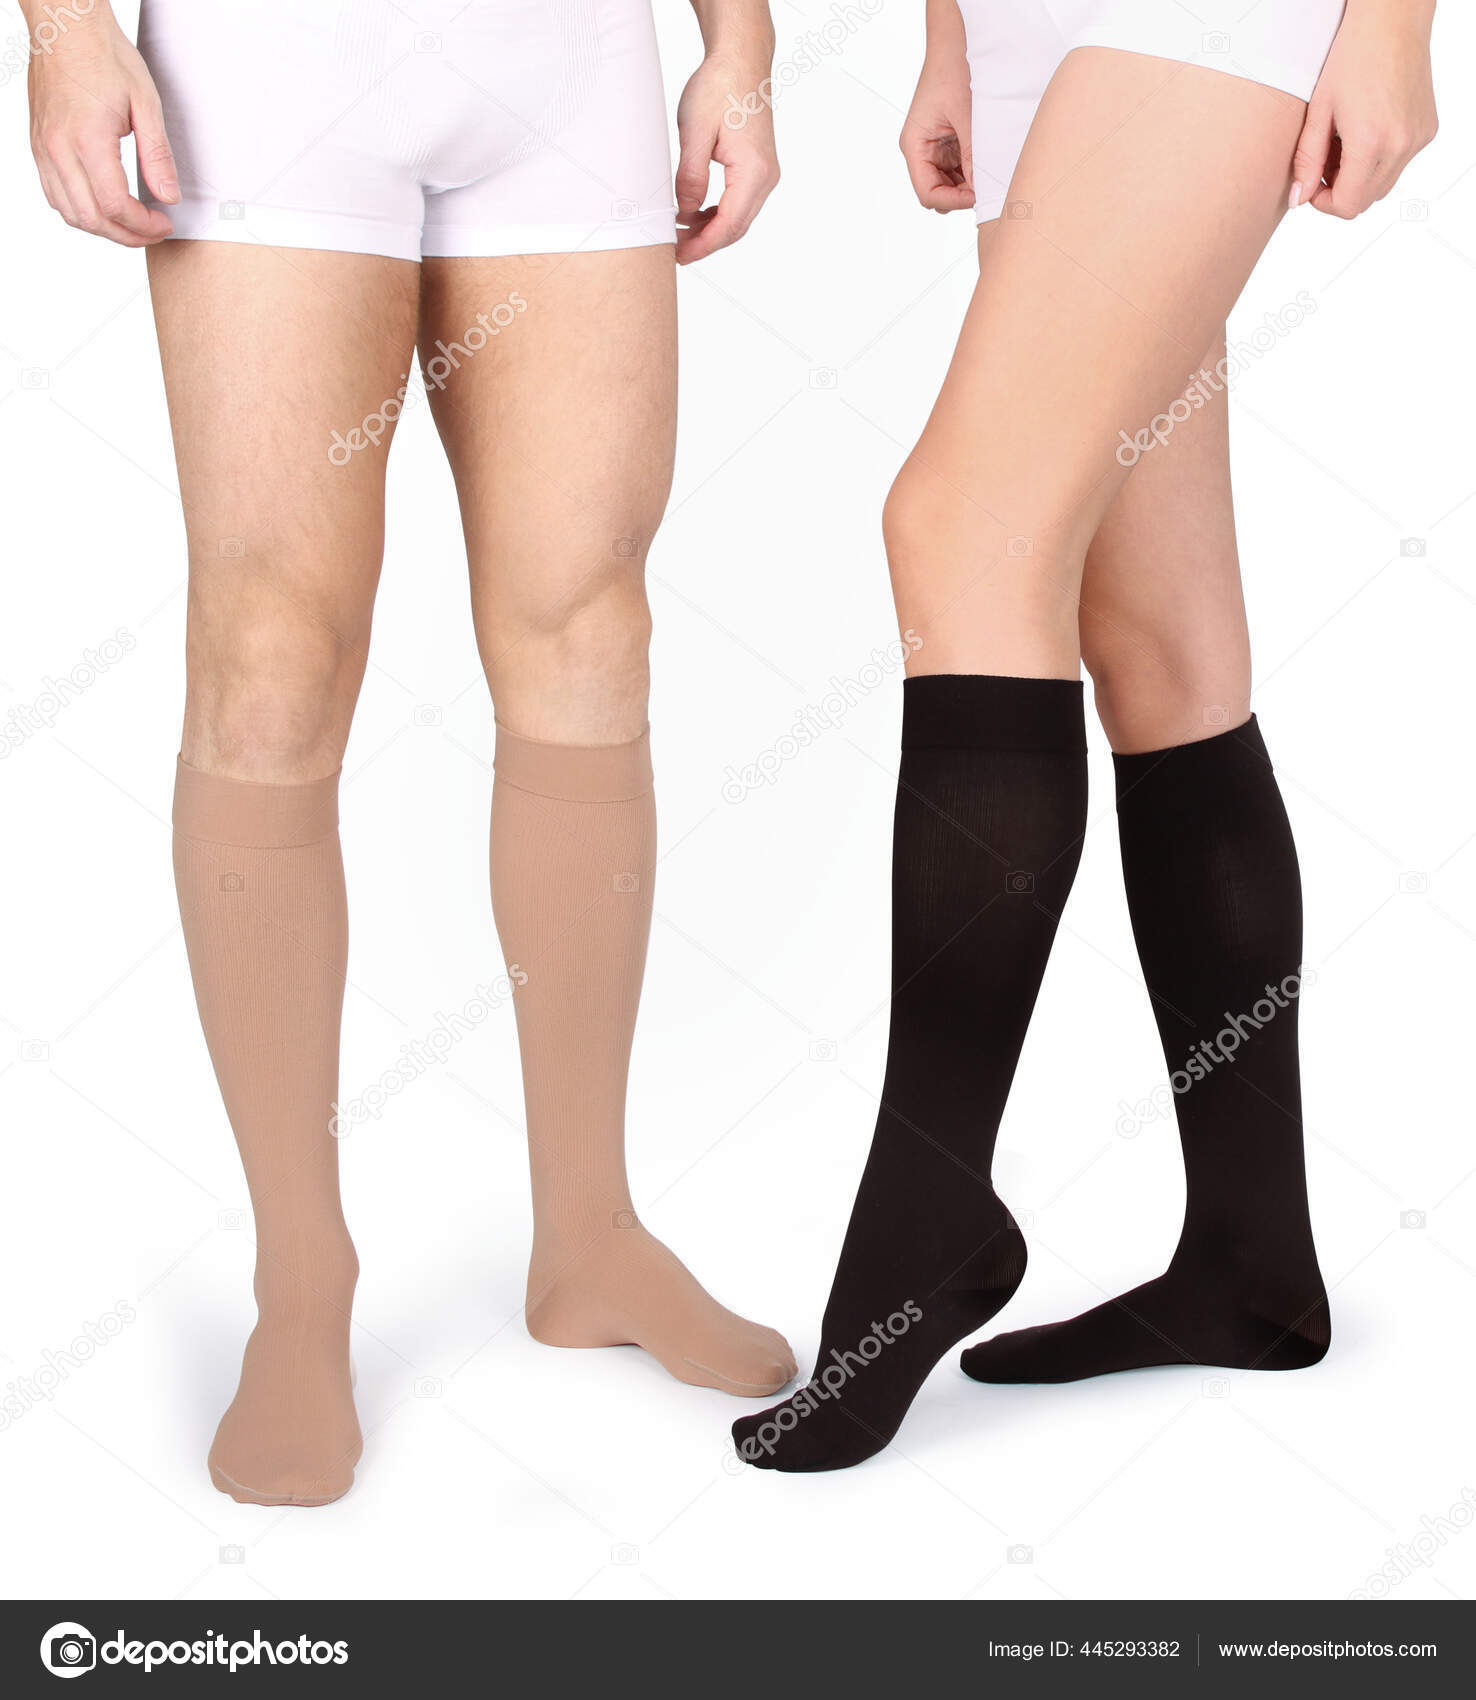 https://st2.depositphotos.com/33757592/44529/i/1600/depositphotos_445293382-stock-photo-compression-hosiery-medical-compression-stockings.jpg